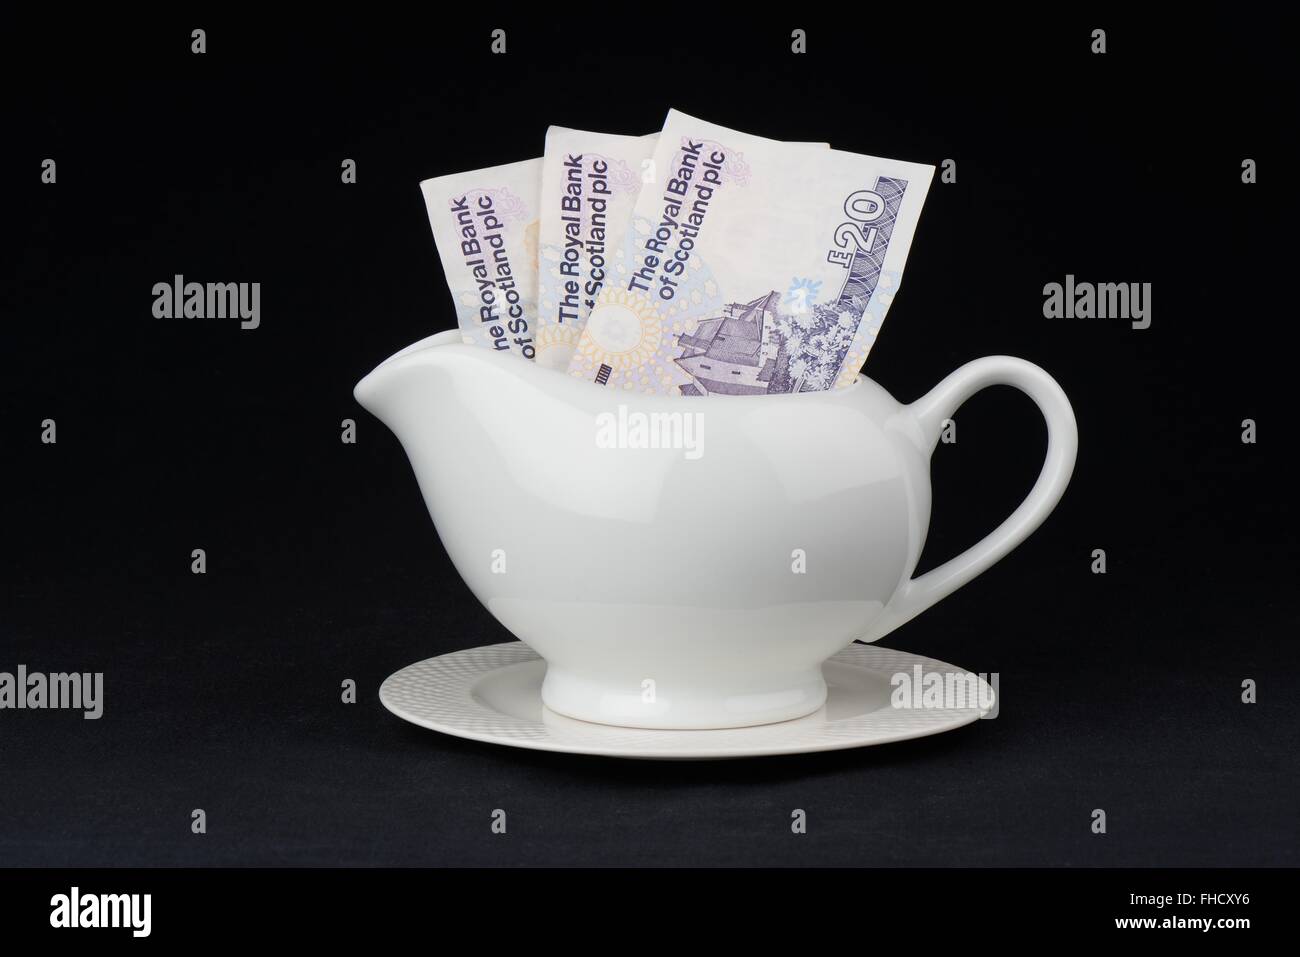 Concept image of 3 twenty pound notes of Royal Bank of Scotland denomination inside a gravy jug Stock Photo